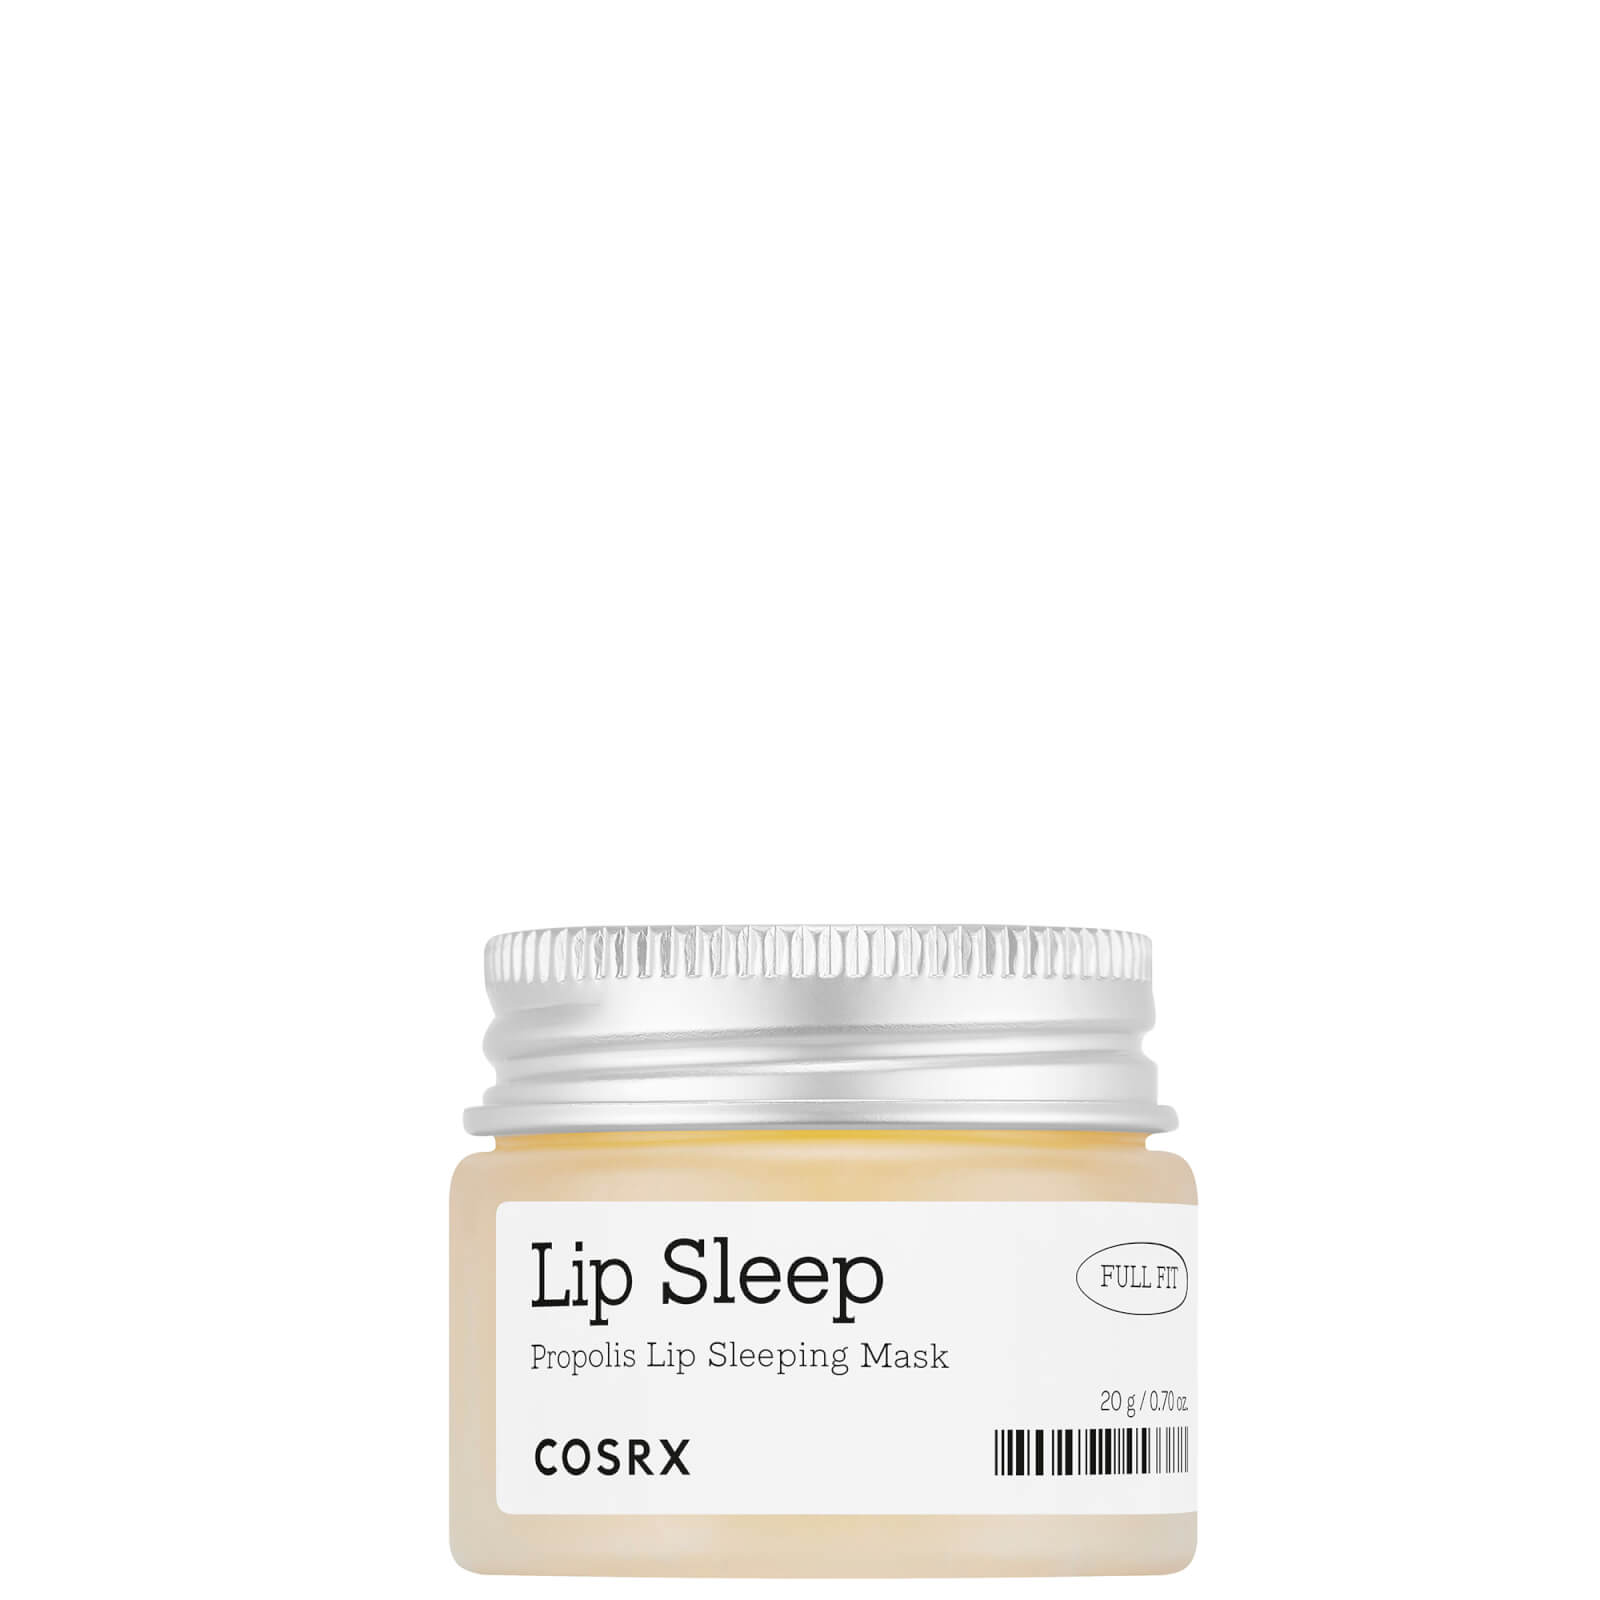 Image of COSRX Full Fit Propolis Lip Sleeping Mask 20g